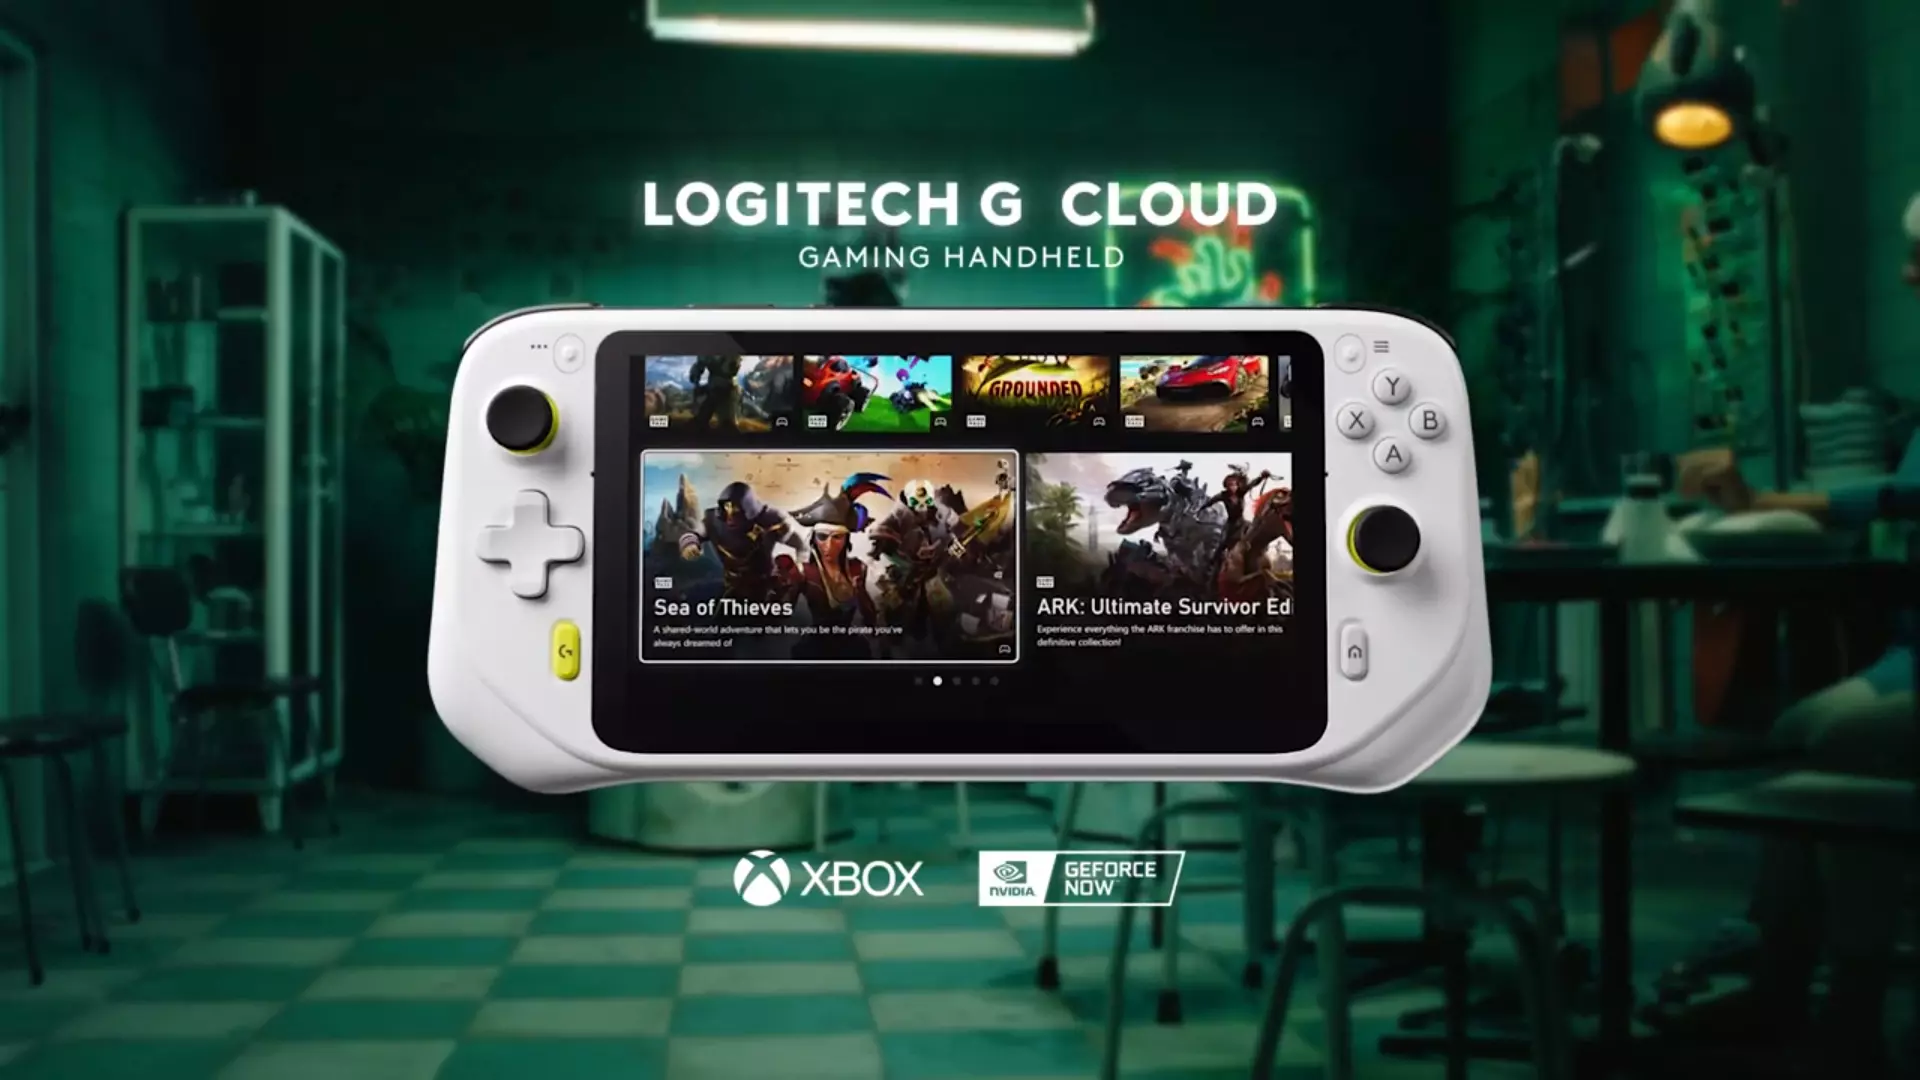 Logitech G cloud gaming handheld